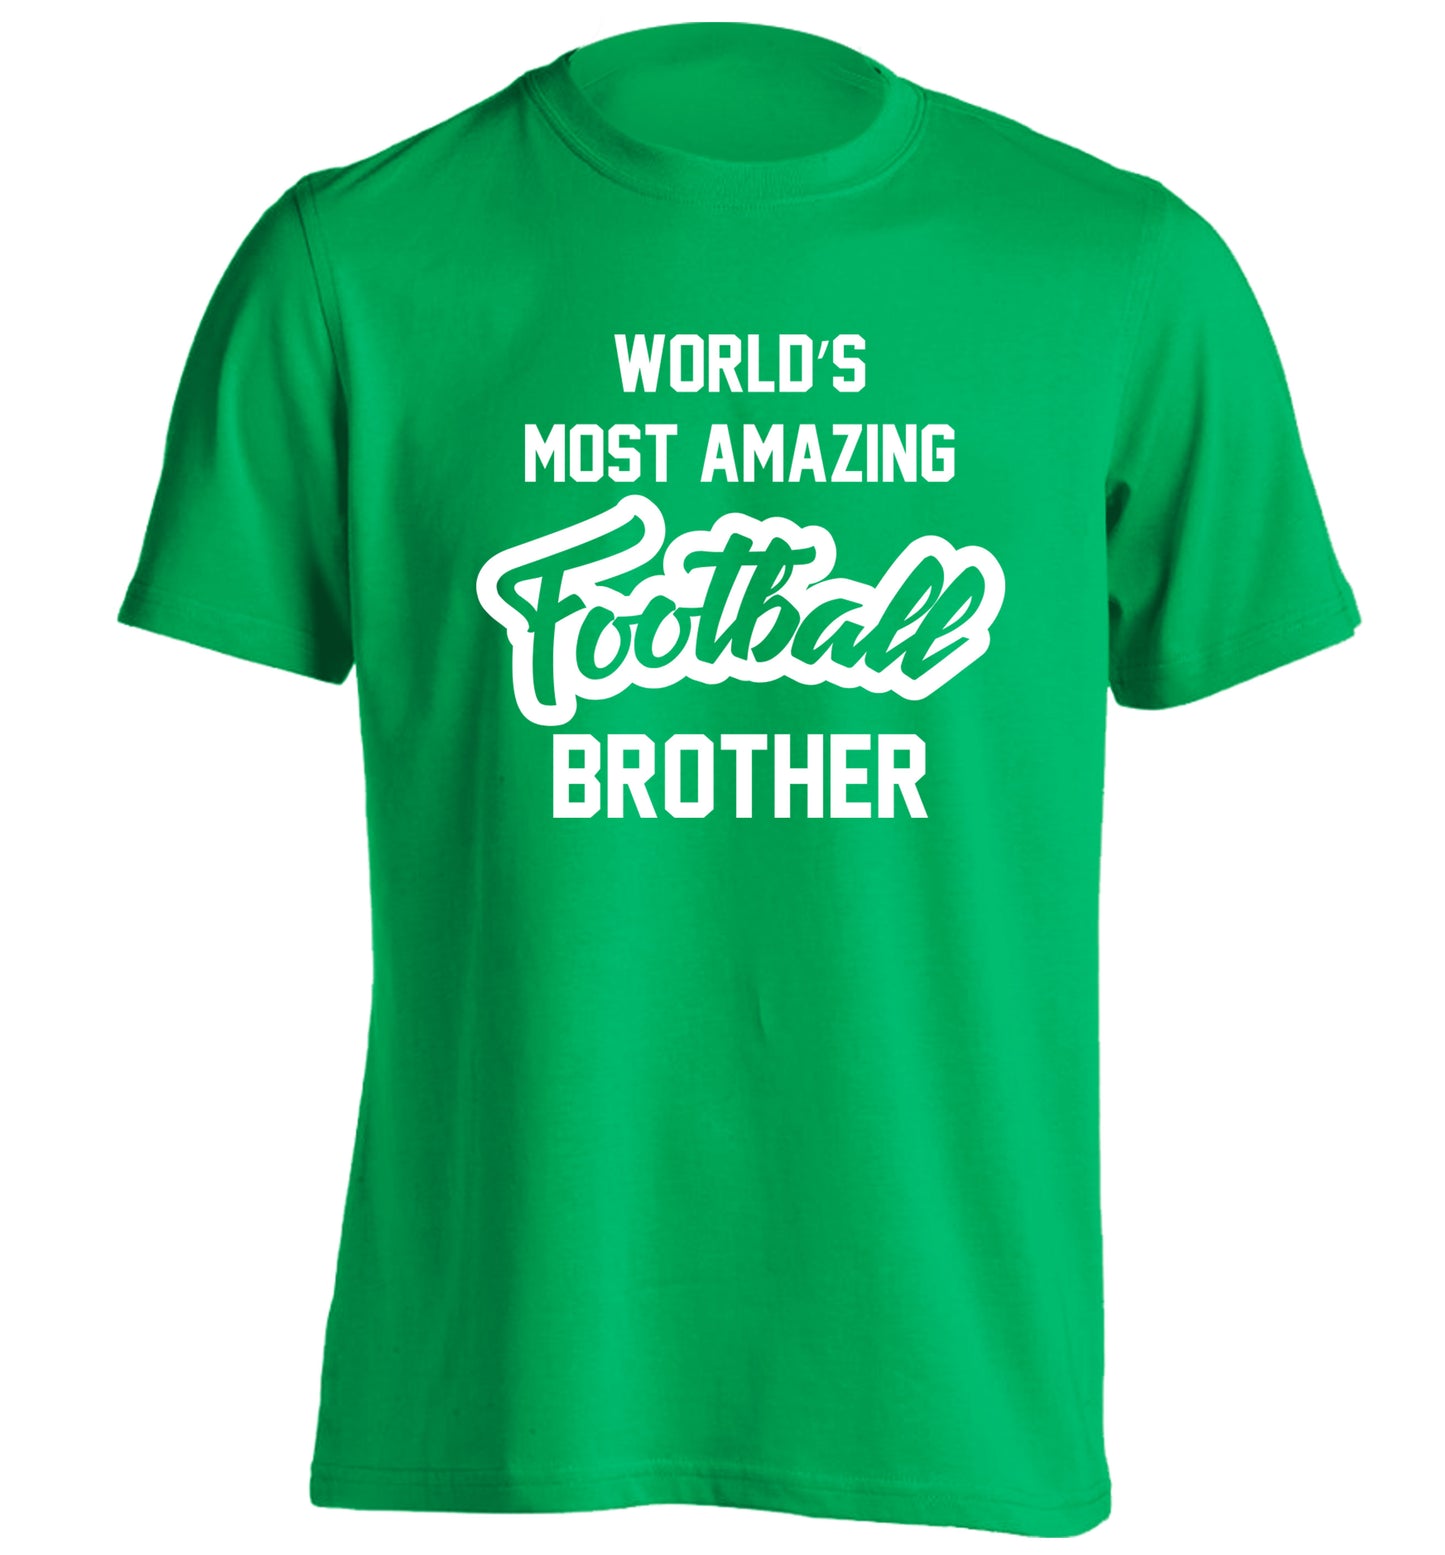 Worlds most amazing football brother adults unisexgreen Tshirt 2XL